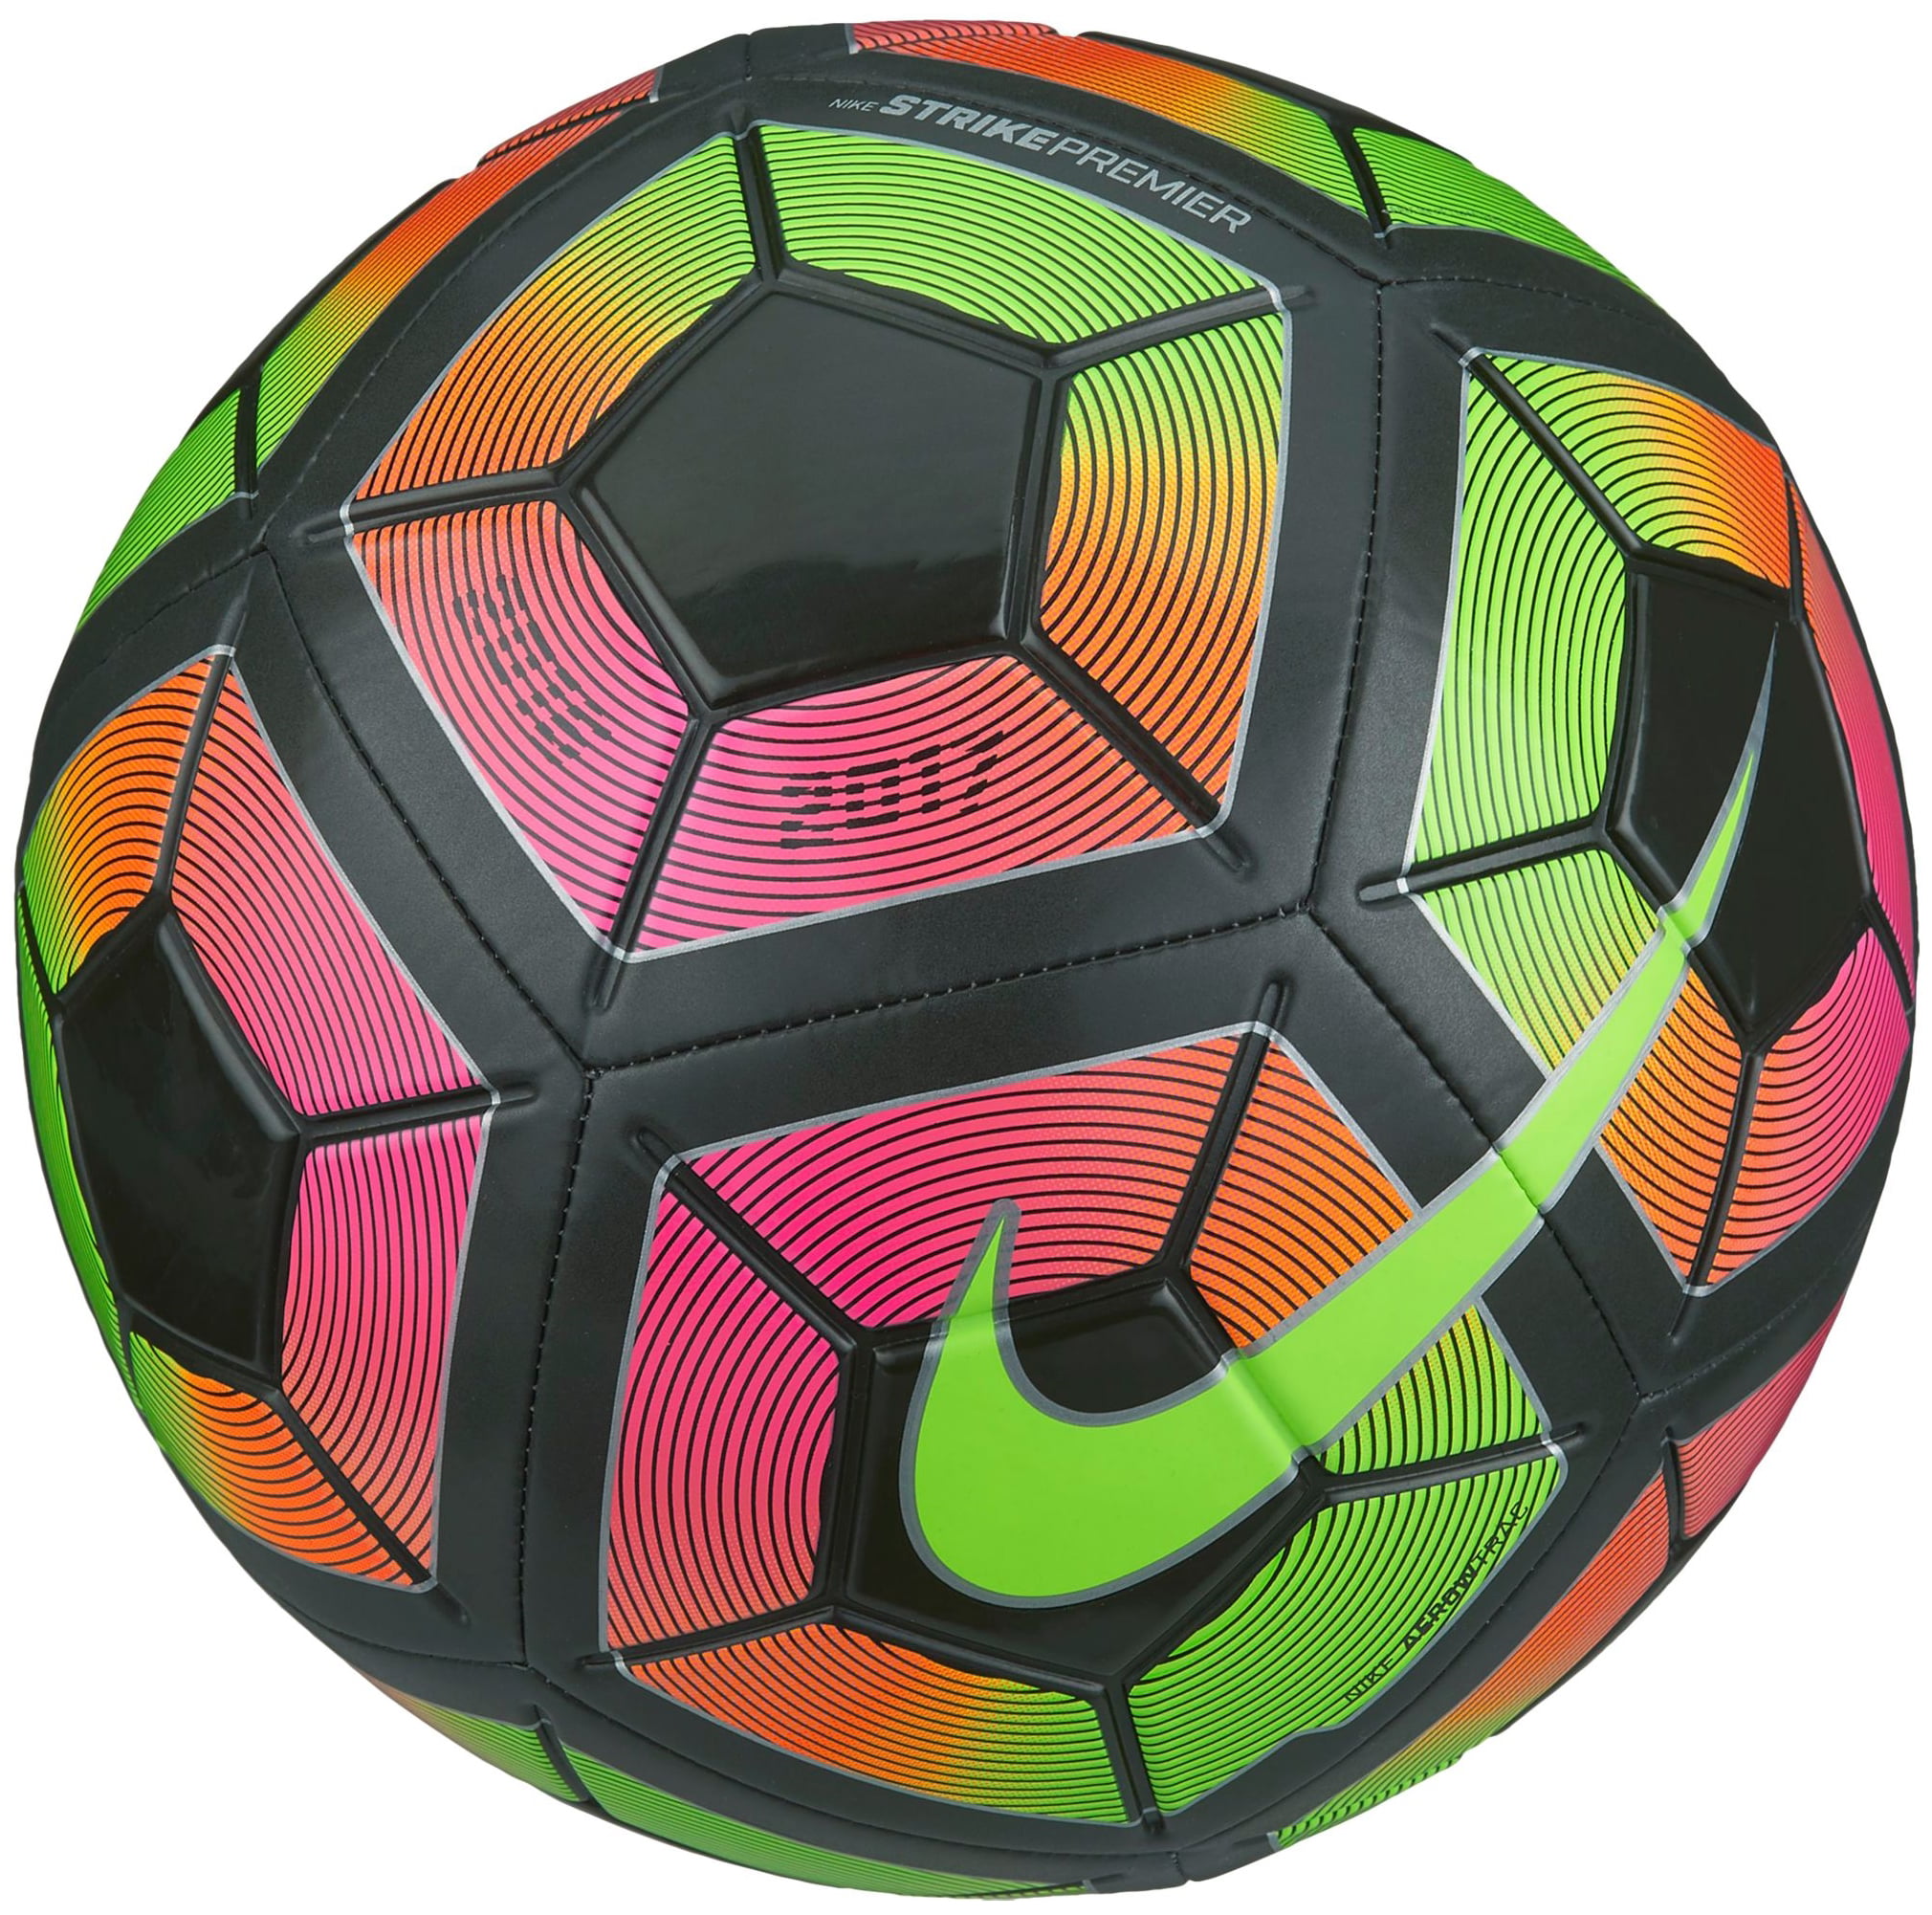  Nike  Strike Premium Soccer Ball  Walmart com Walmart com